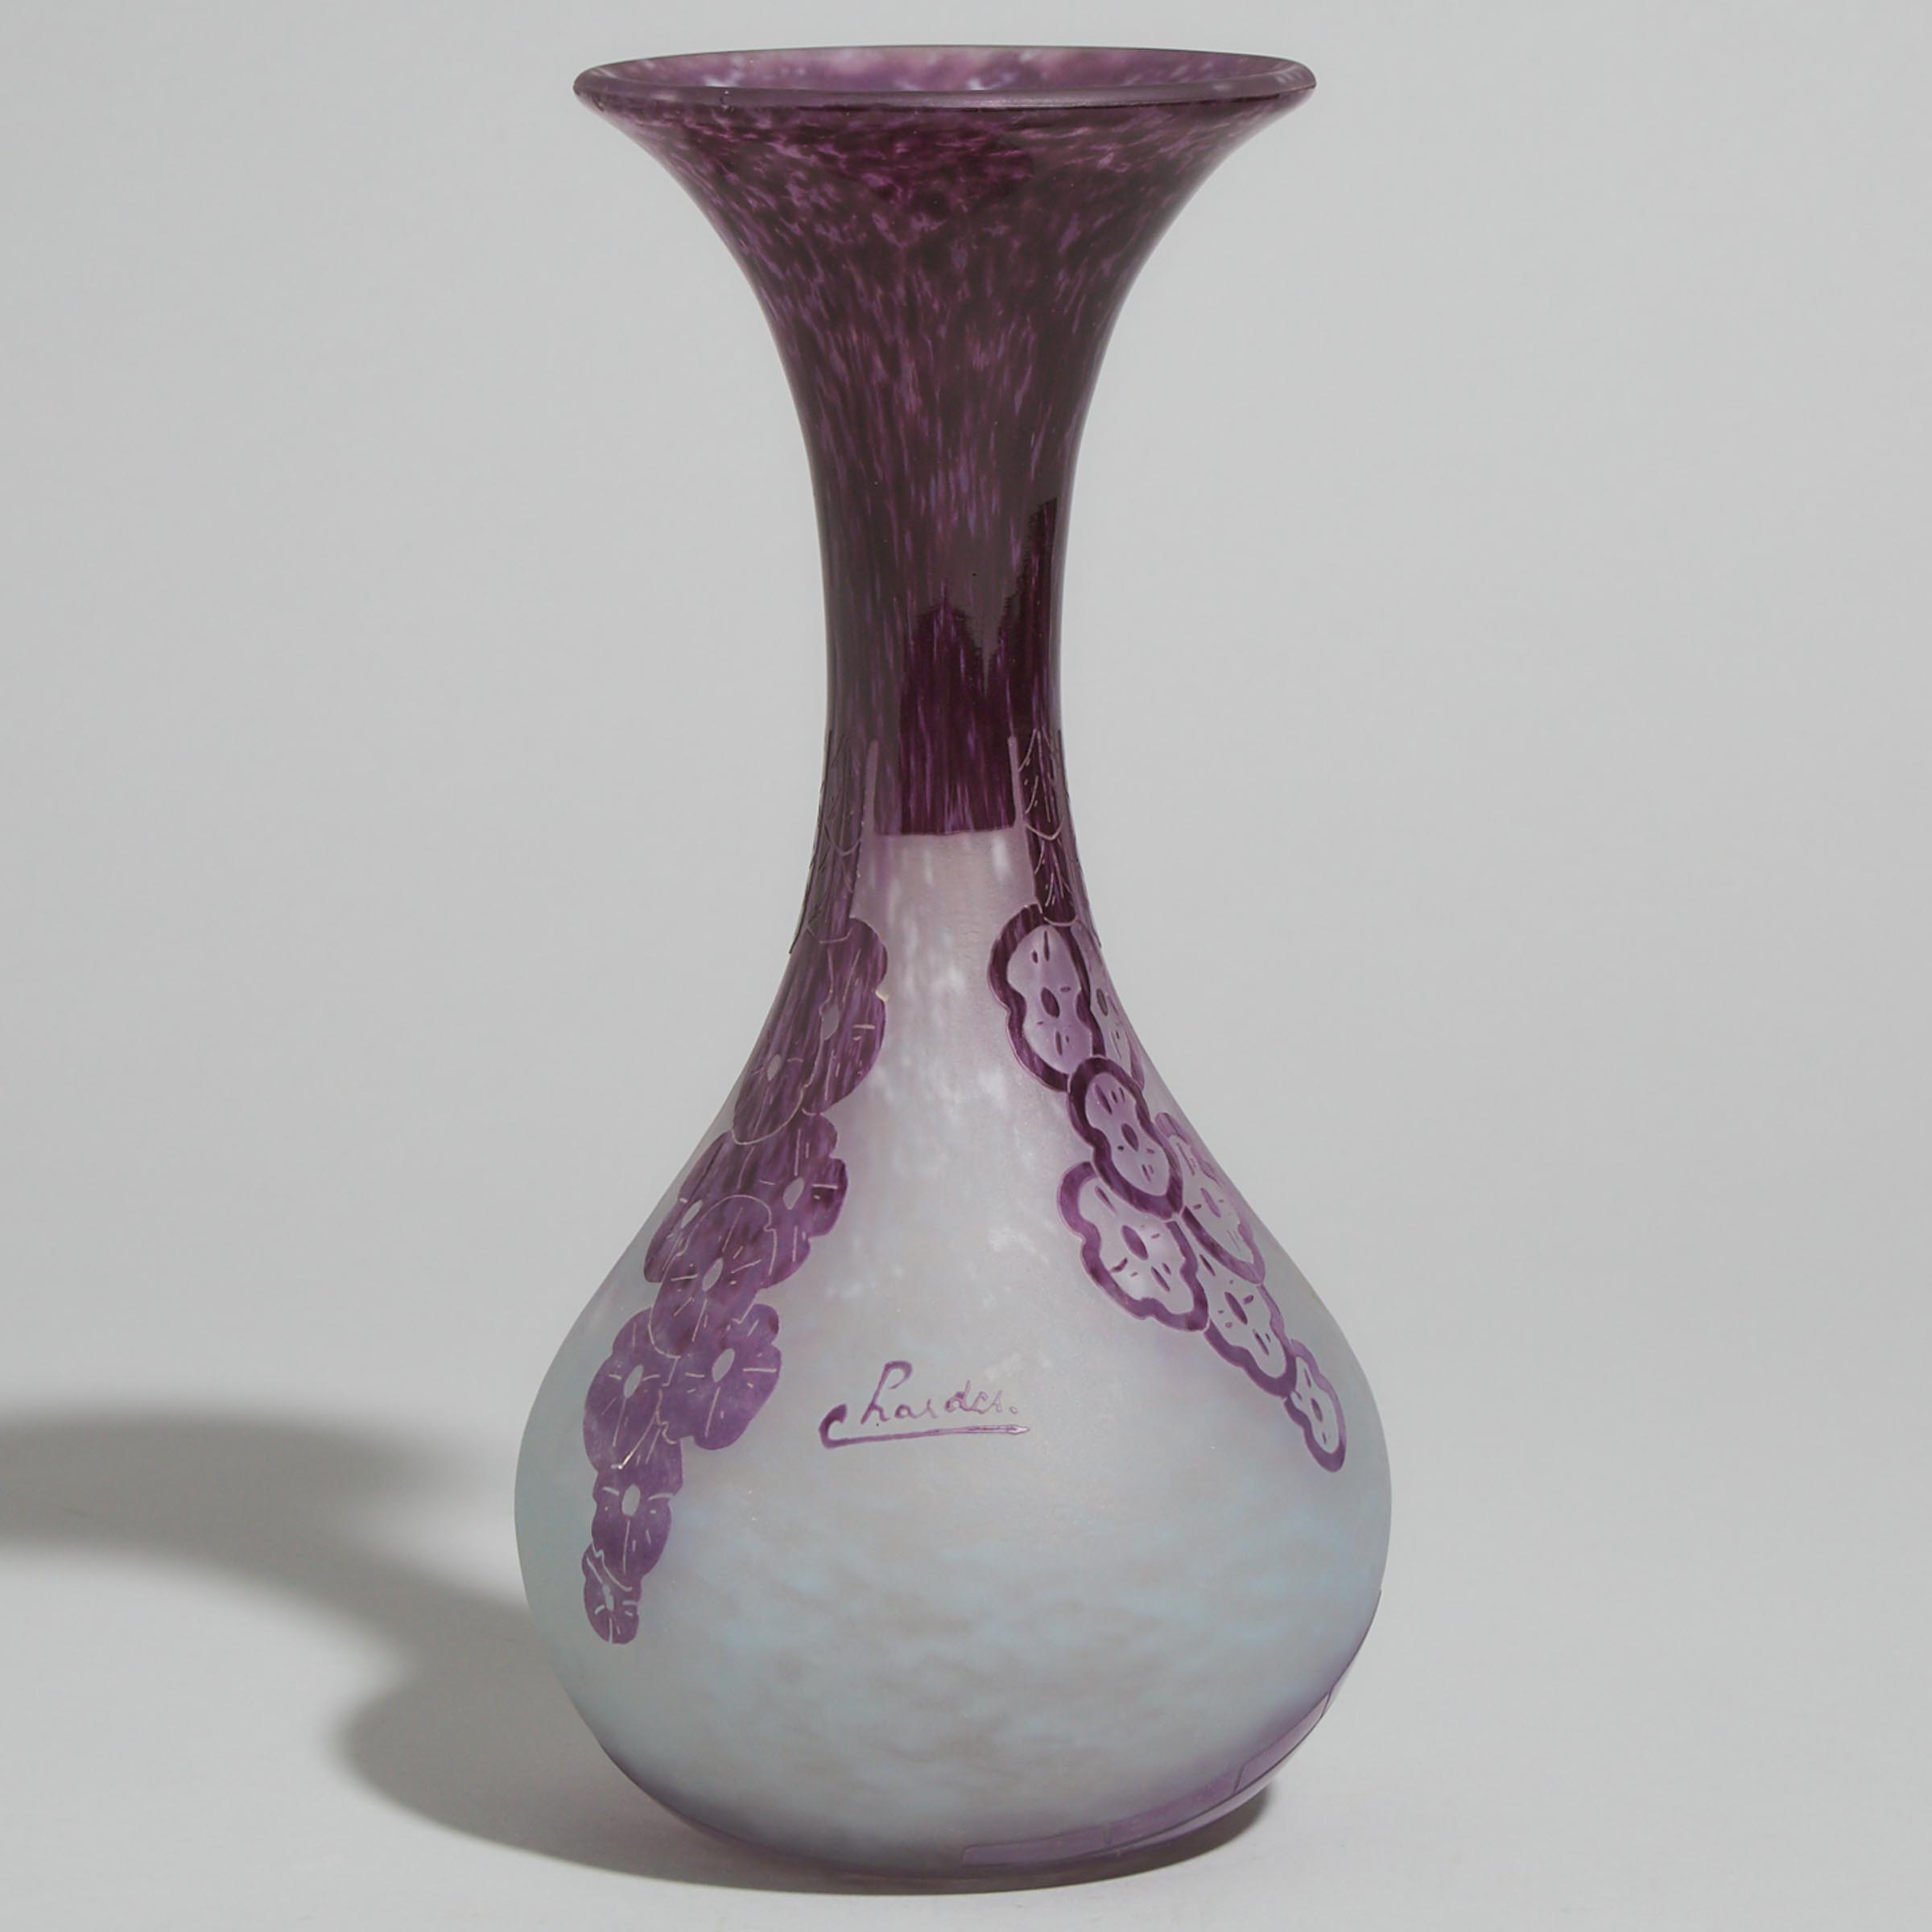 Charder Le Verre Français 'Lavande' Cameo Glass Vase, for Stewart & Co., New York, c.1927